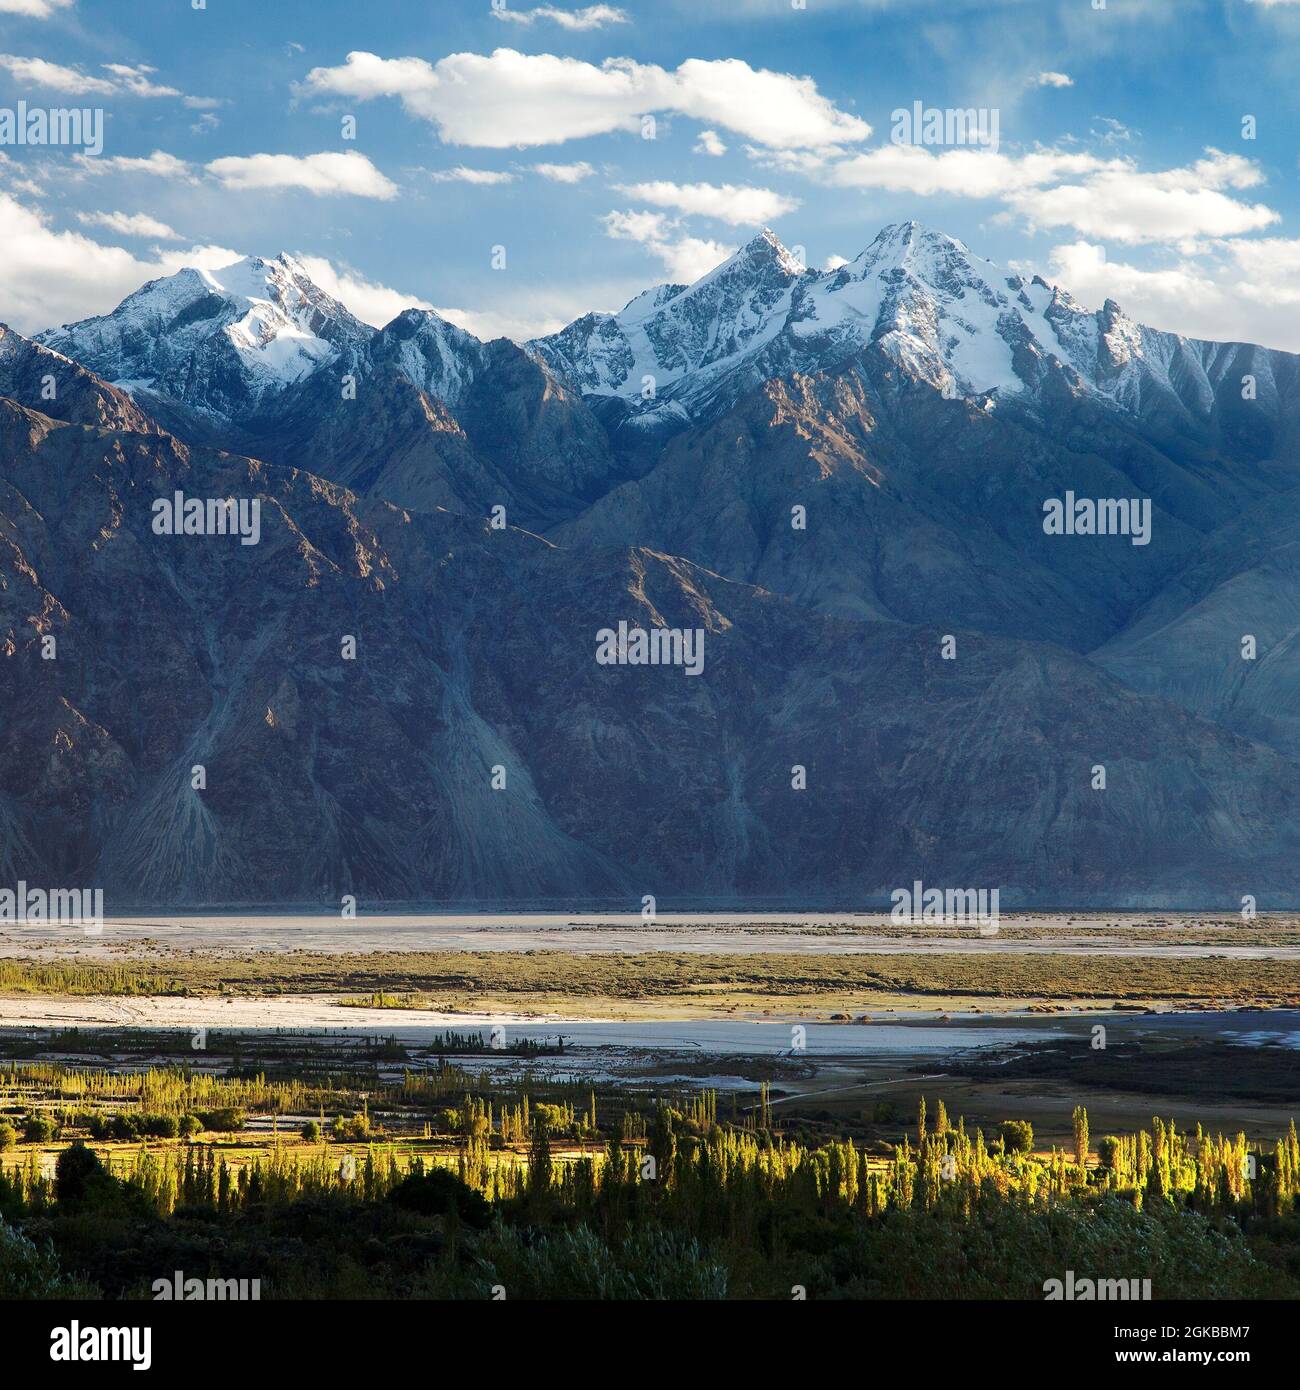 Nubra valley - Indian himalayas - Ladakh - Jammu and Kashmir - India Stock Photo